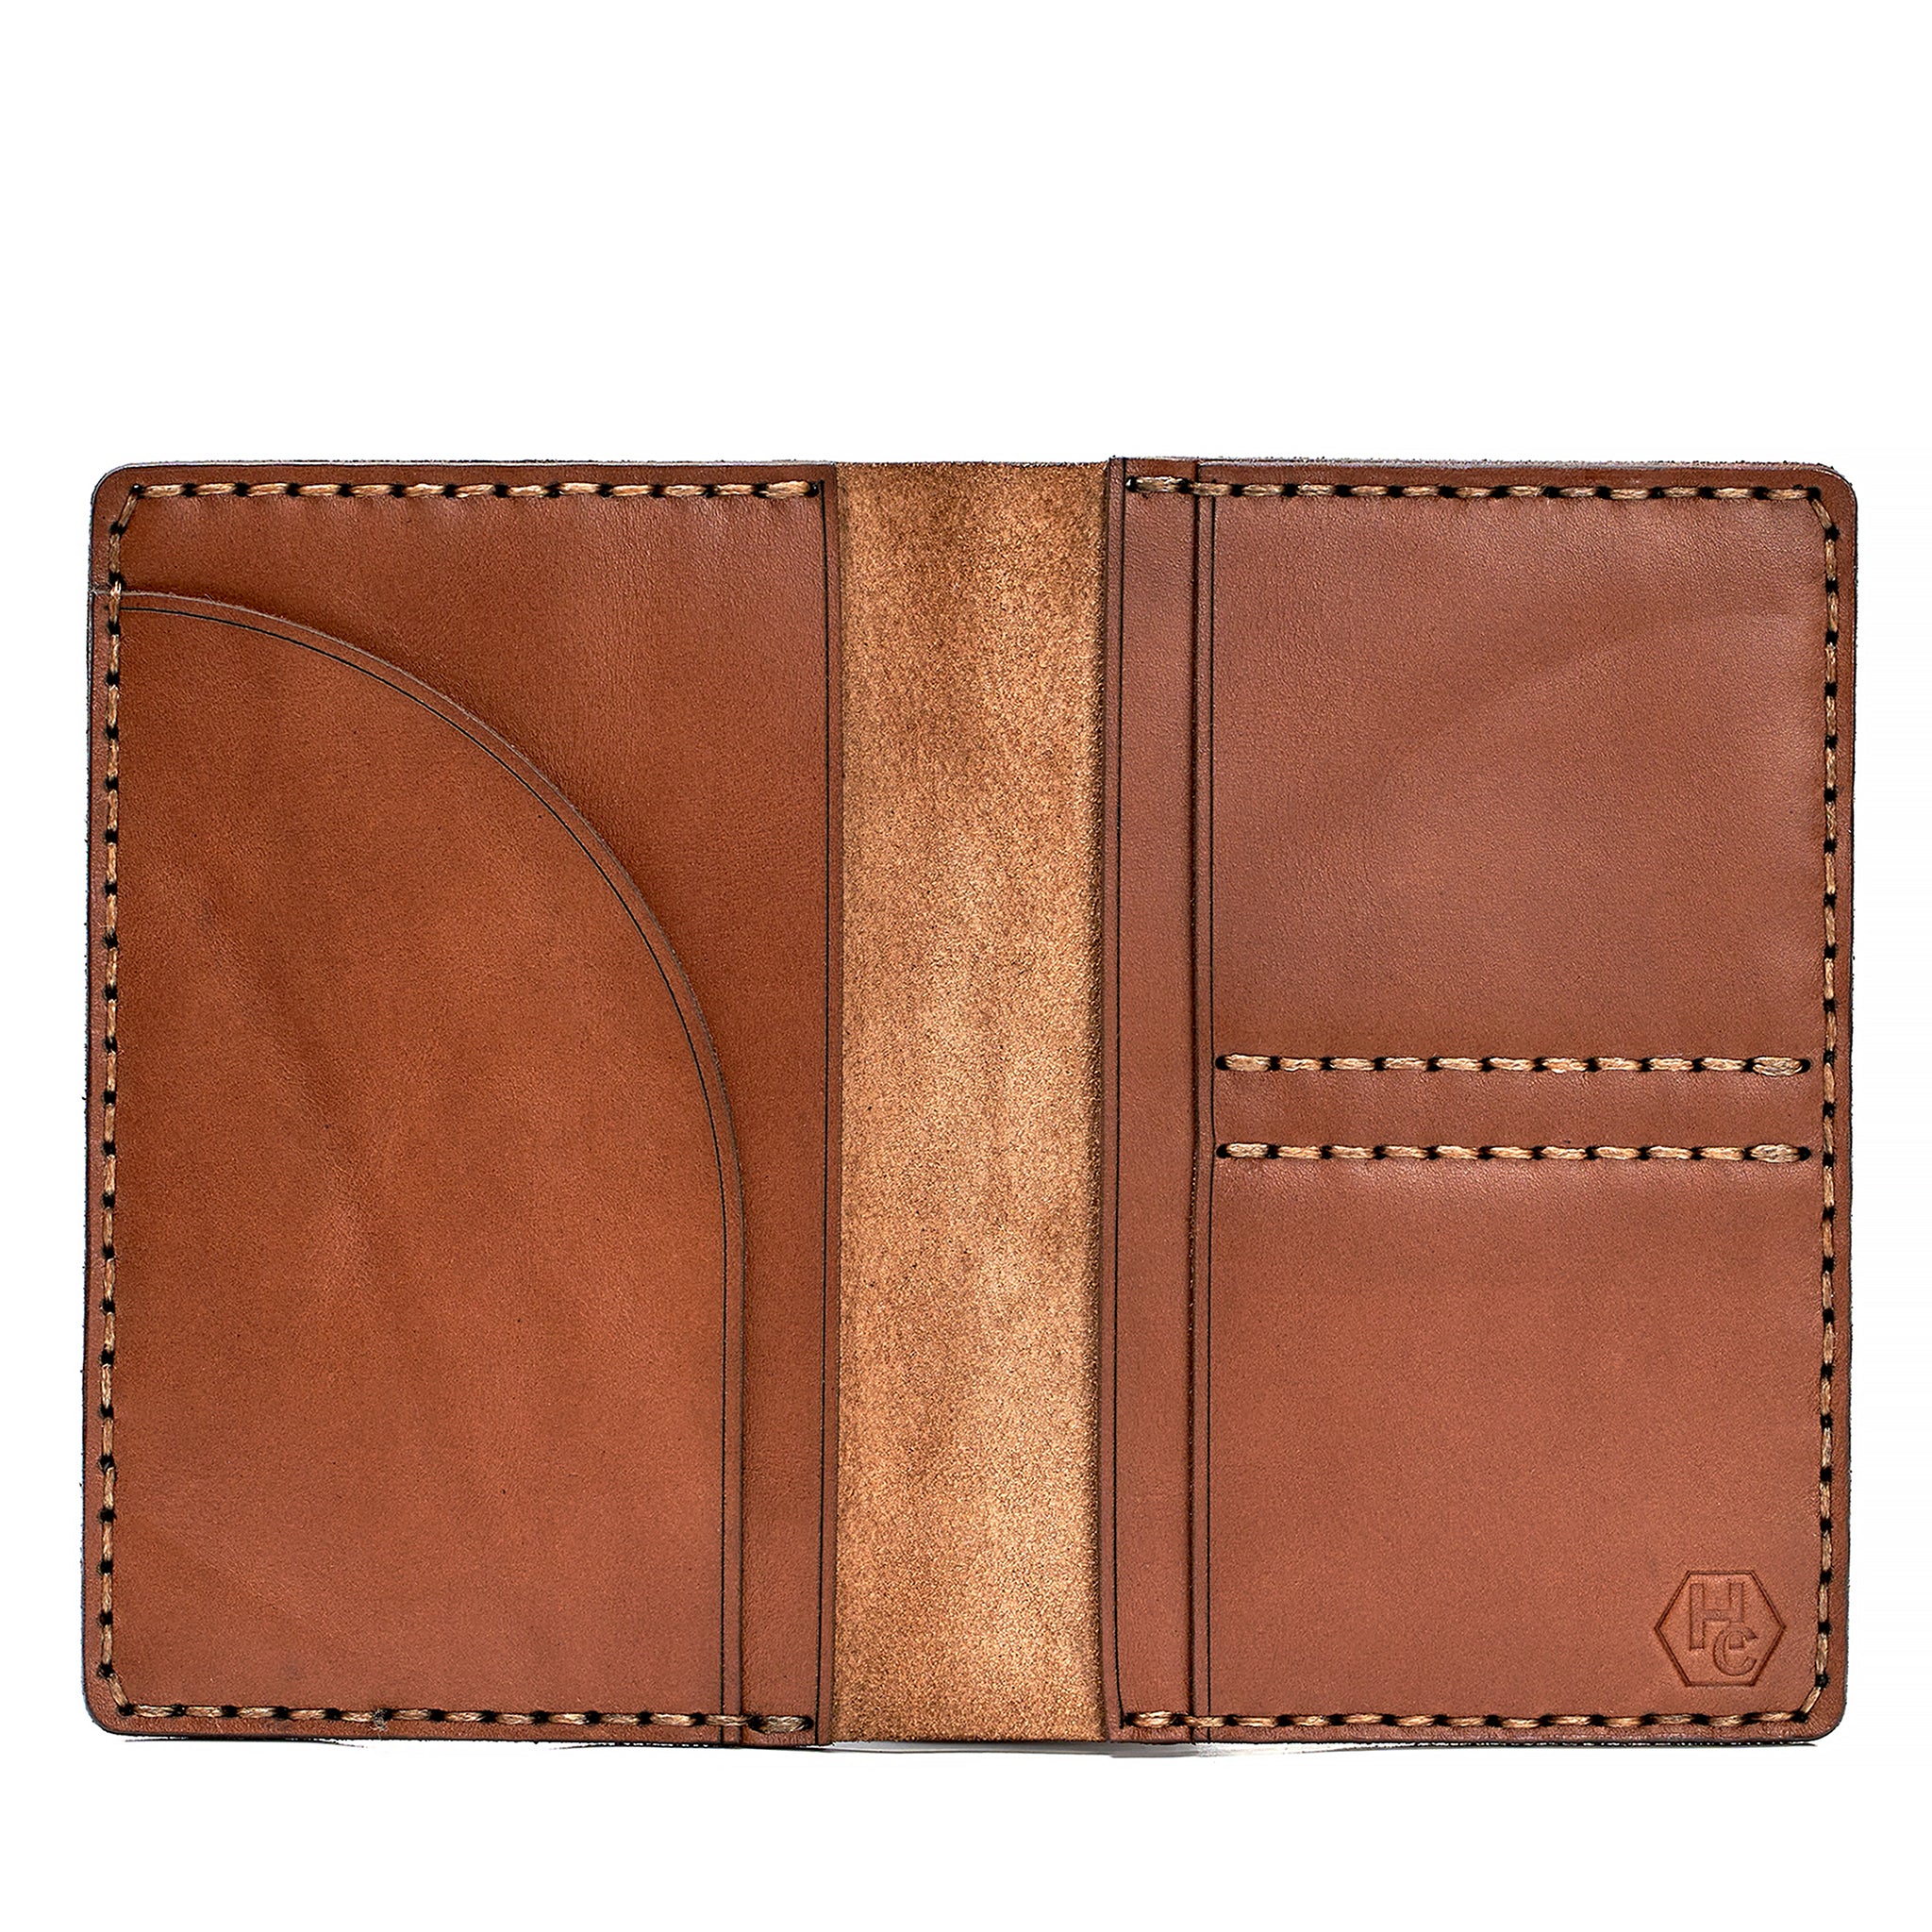 Handmade Leather Passport Case Light Mahogany 31707664515223